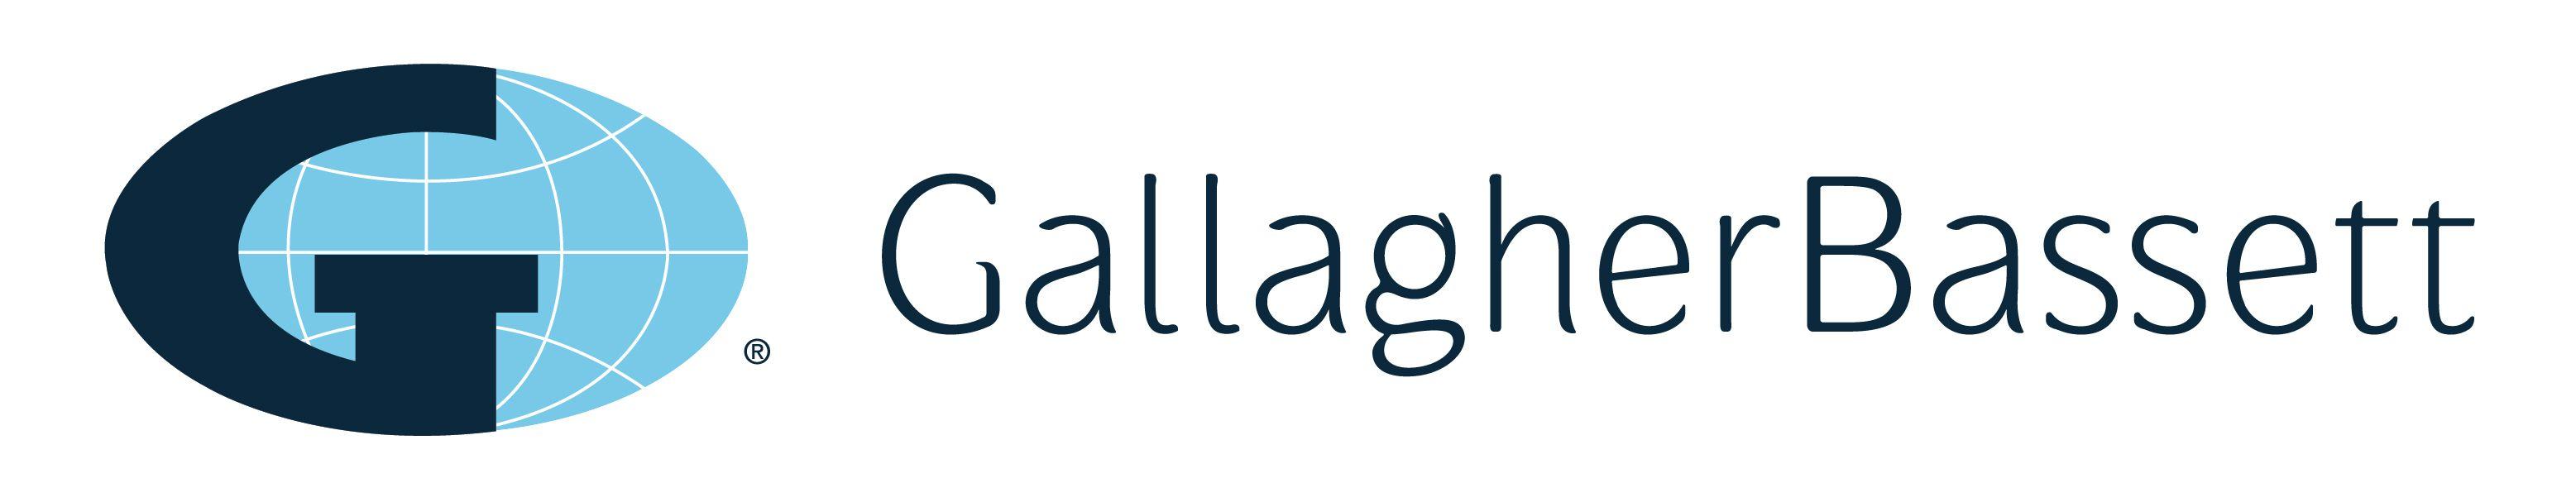 Gallagher Insurance Logo - Victorian Workers' Compensation - Gallagher Bassett